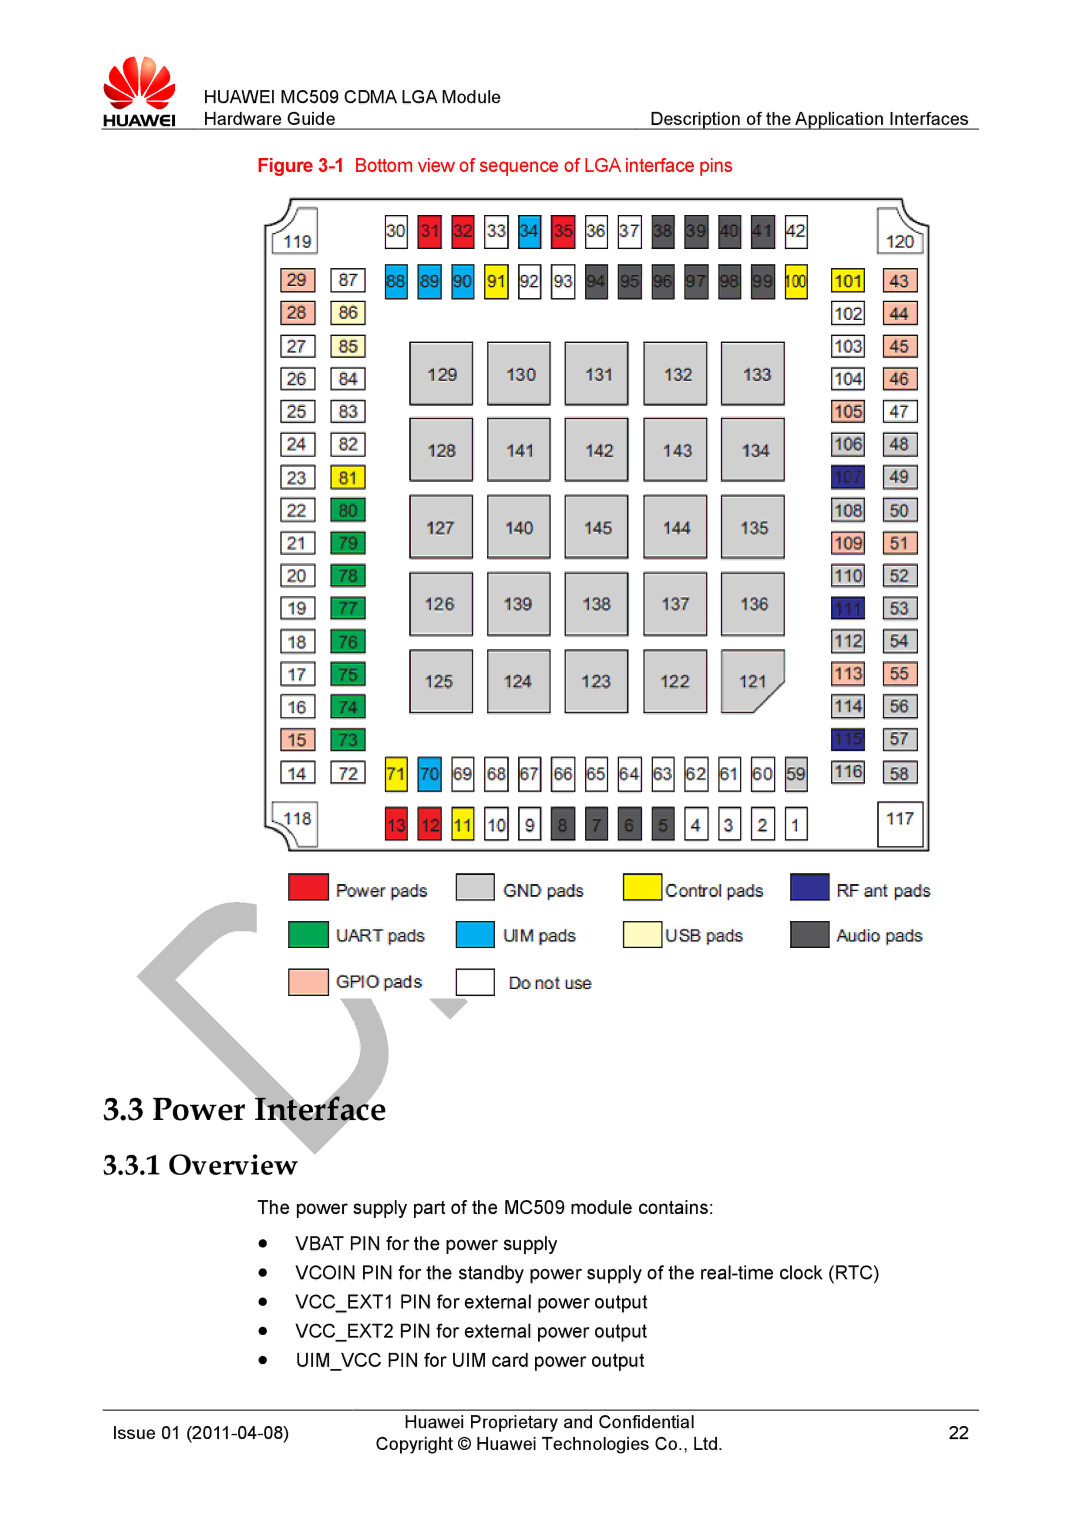 Huawei MC509 CDMA LGA manual Power Interface, Overview 